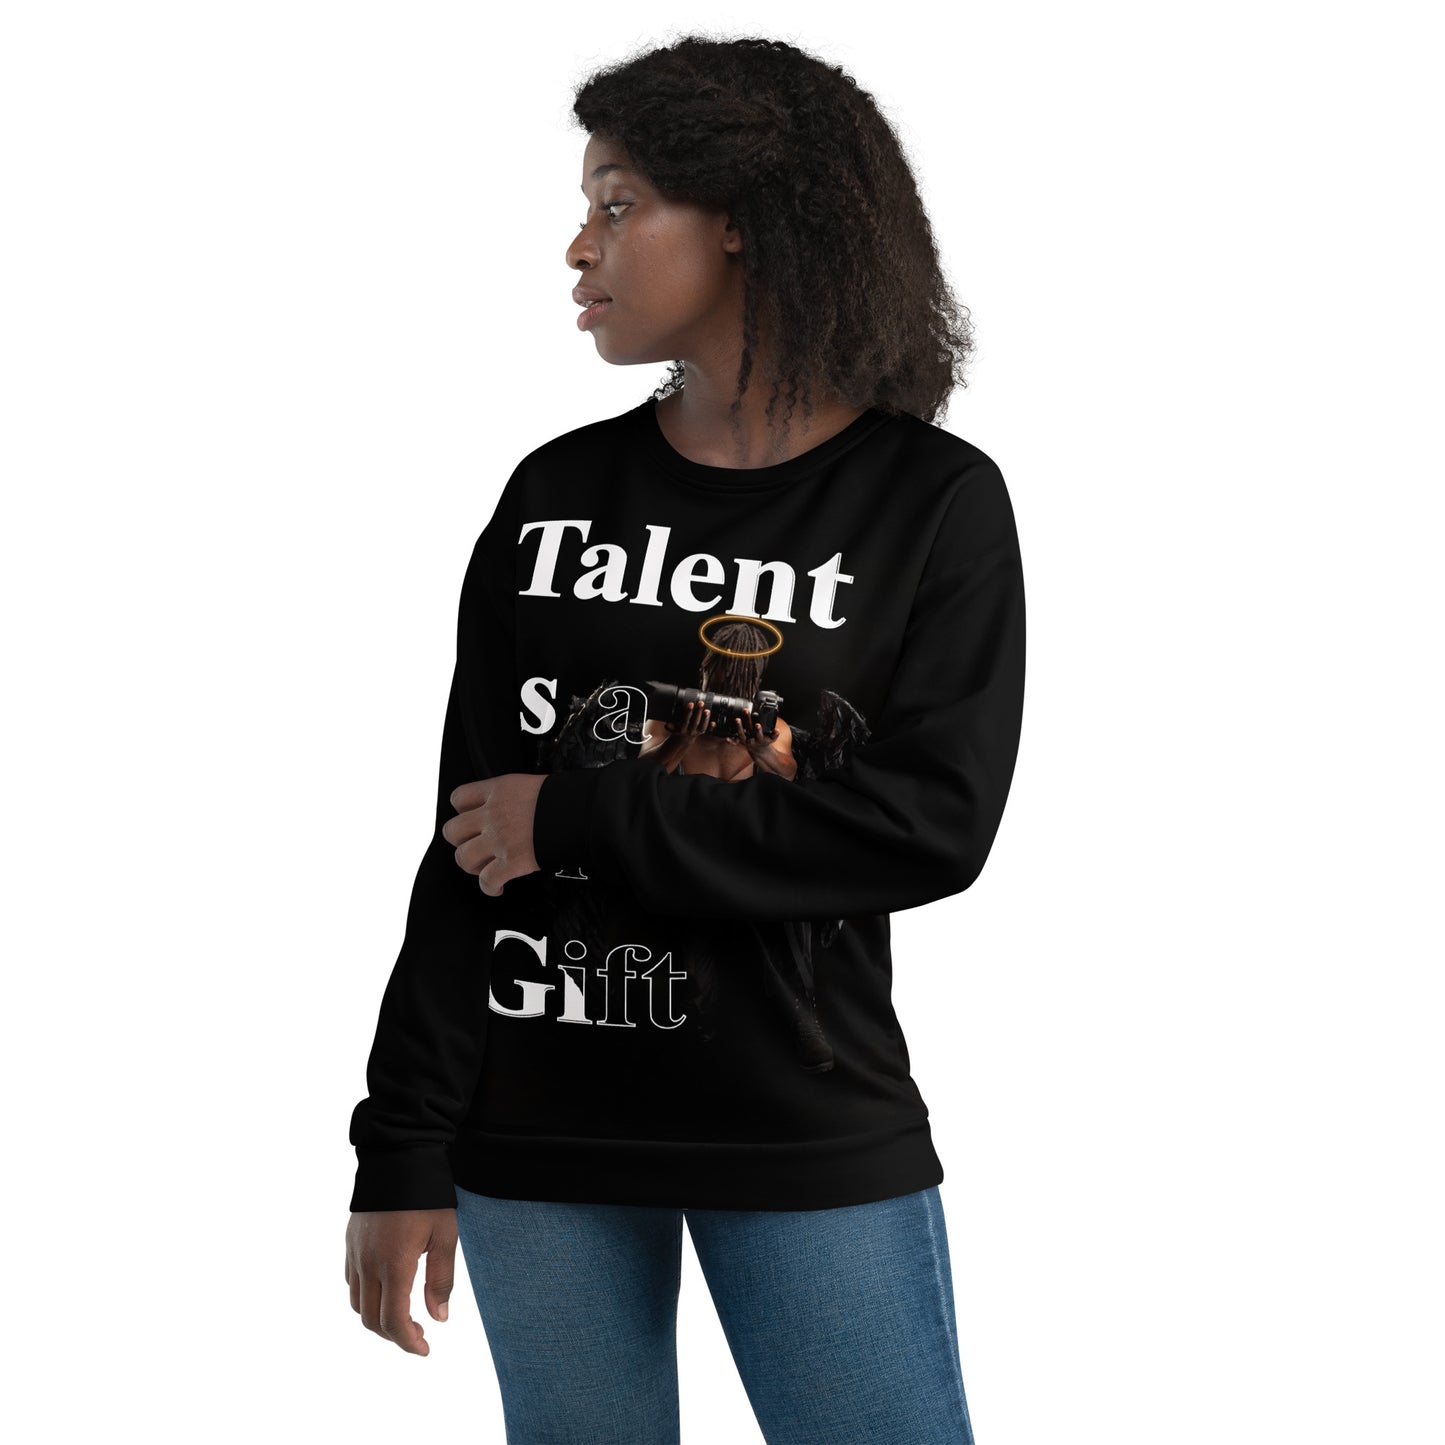 théo photography-théo gallery expoHauts-talent-gift-jacket-long sleeve-unisexe jacket